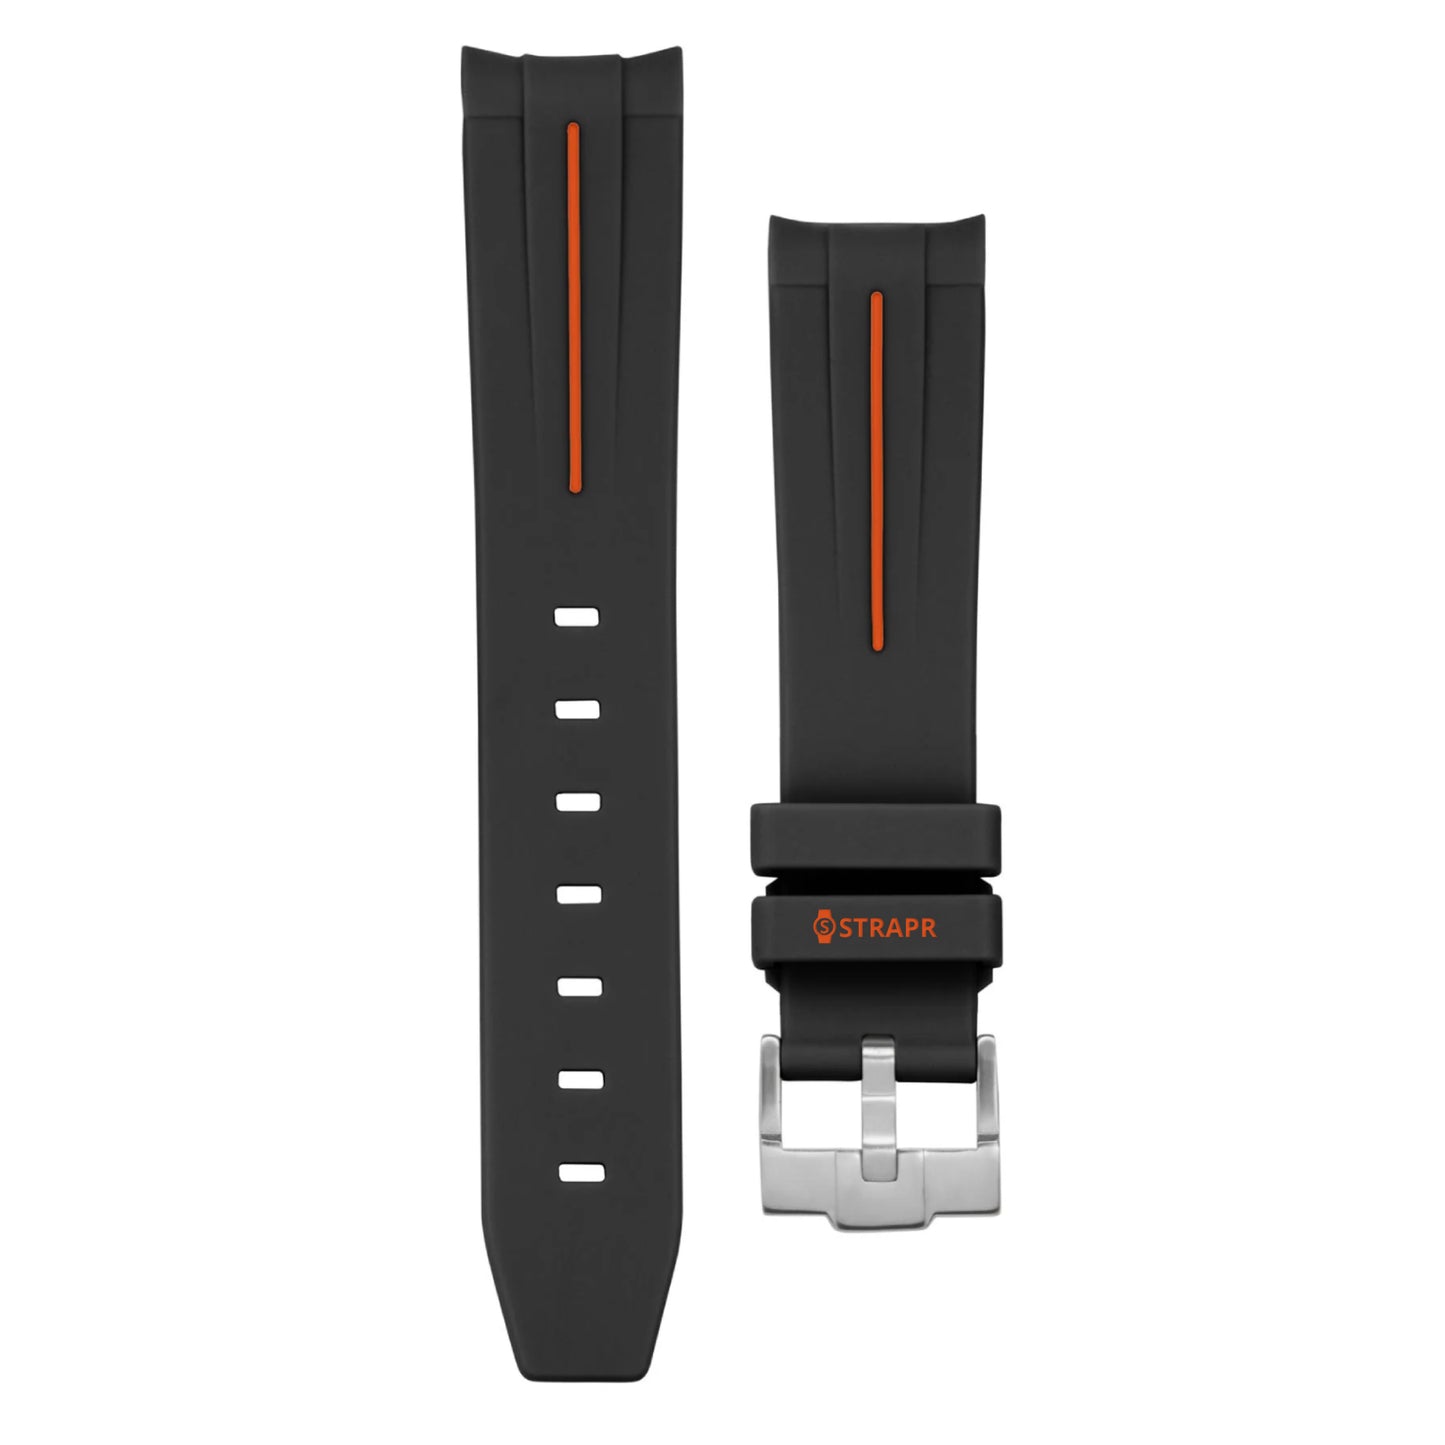 Omega Swatch MoonSwatch cinturino strap nero e arancione